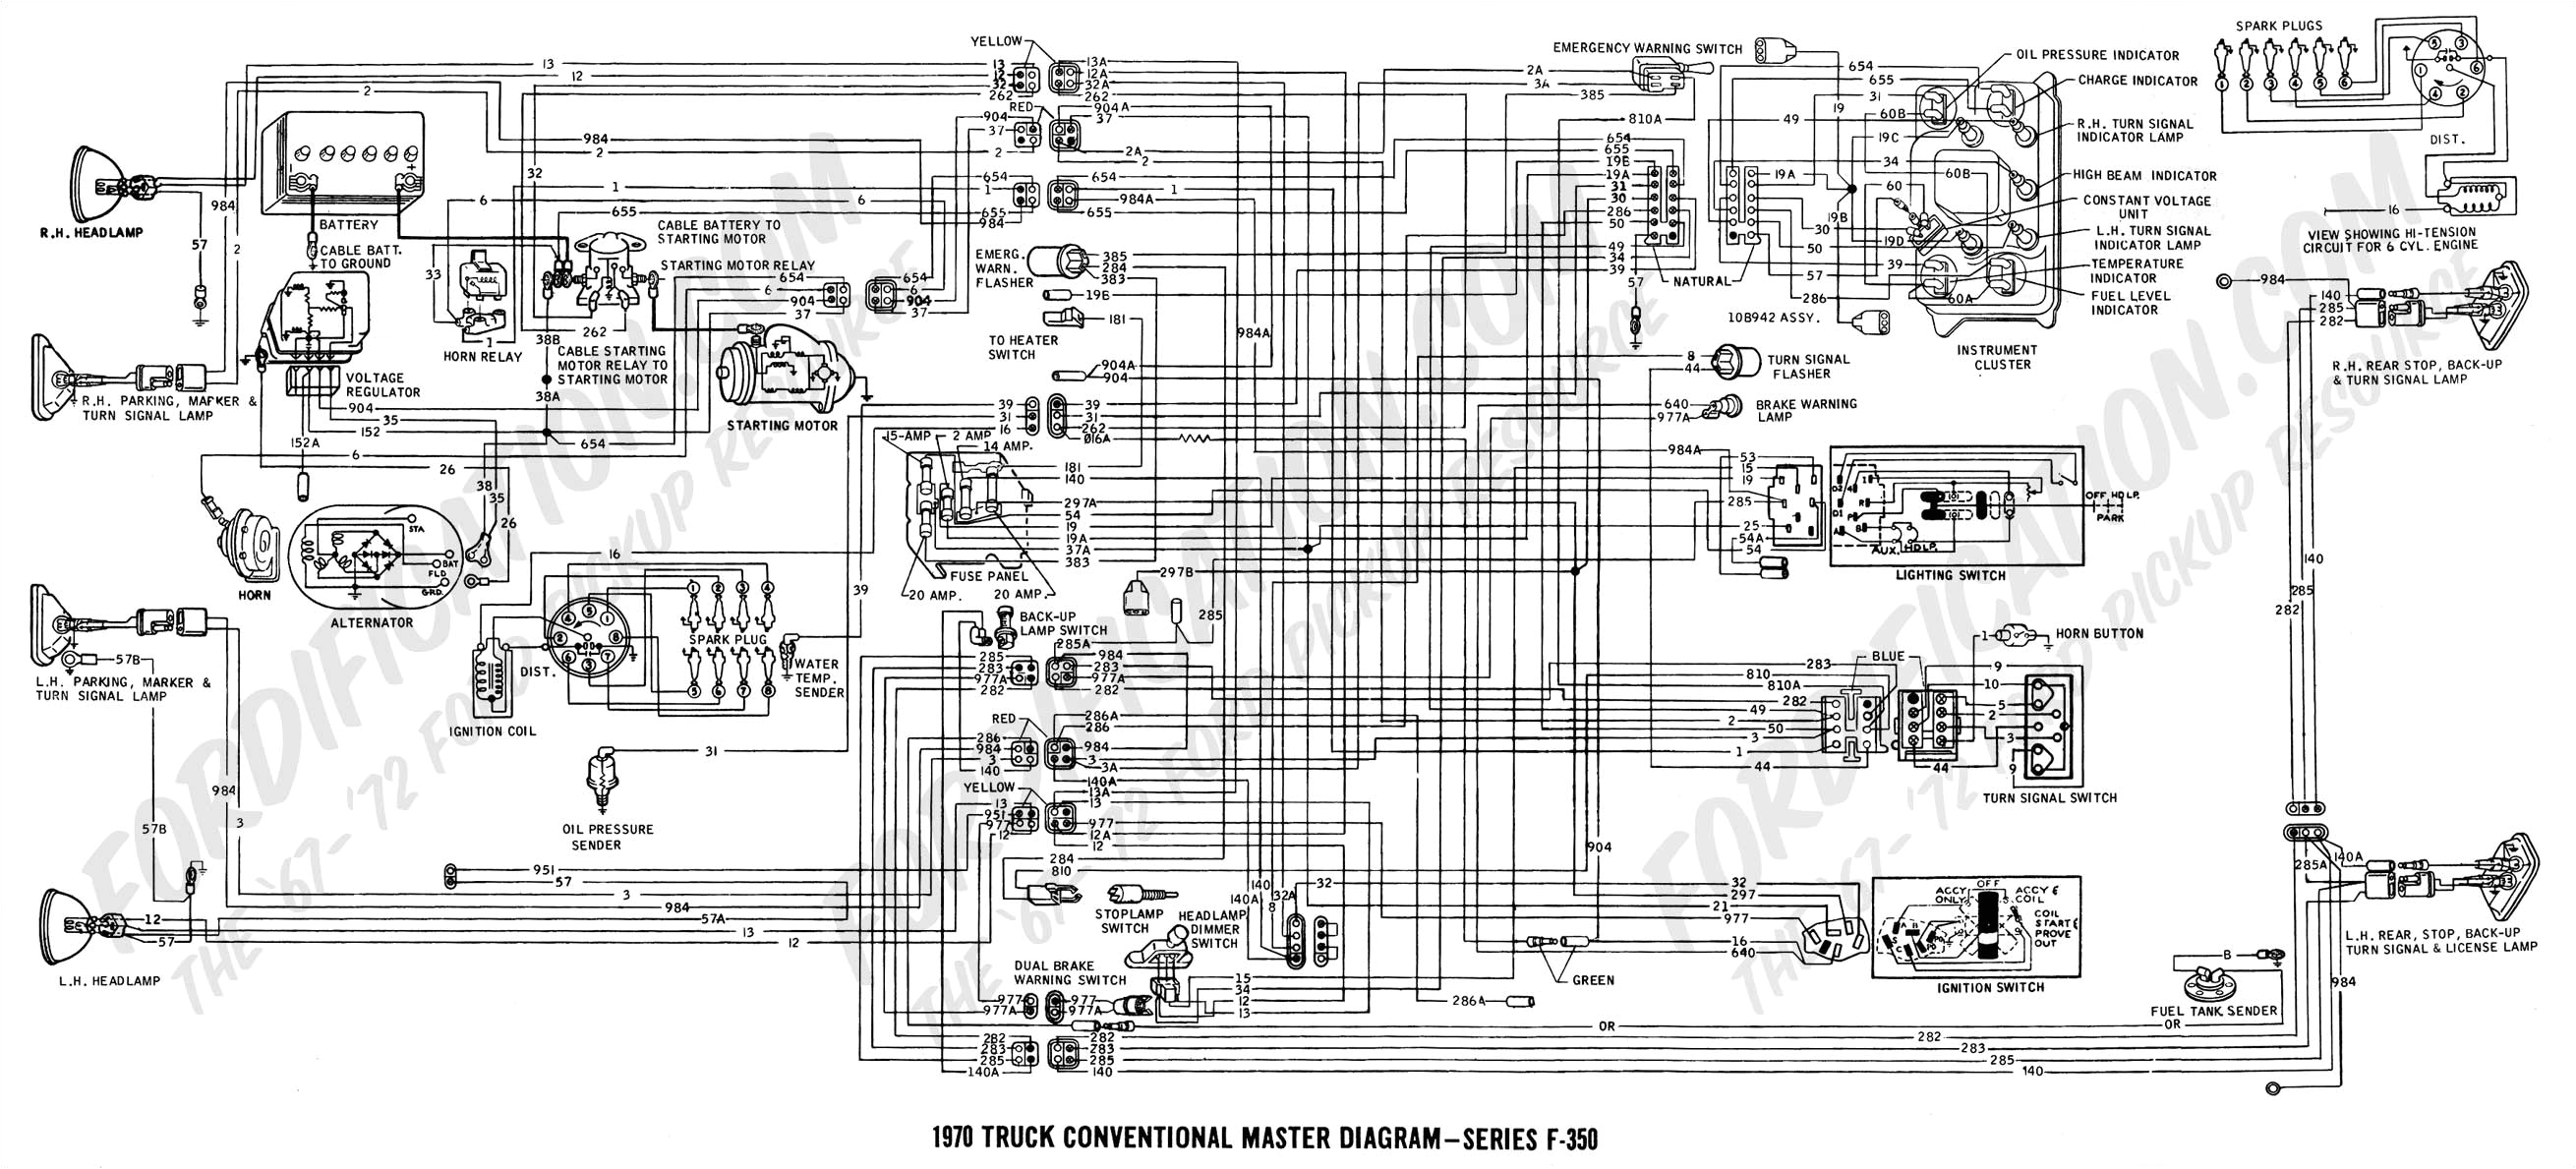 2000 ford f350 wiring schematic wiring diagram expert 2000 f250 wiring schematic 2000 f250 wiring schematic